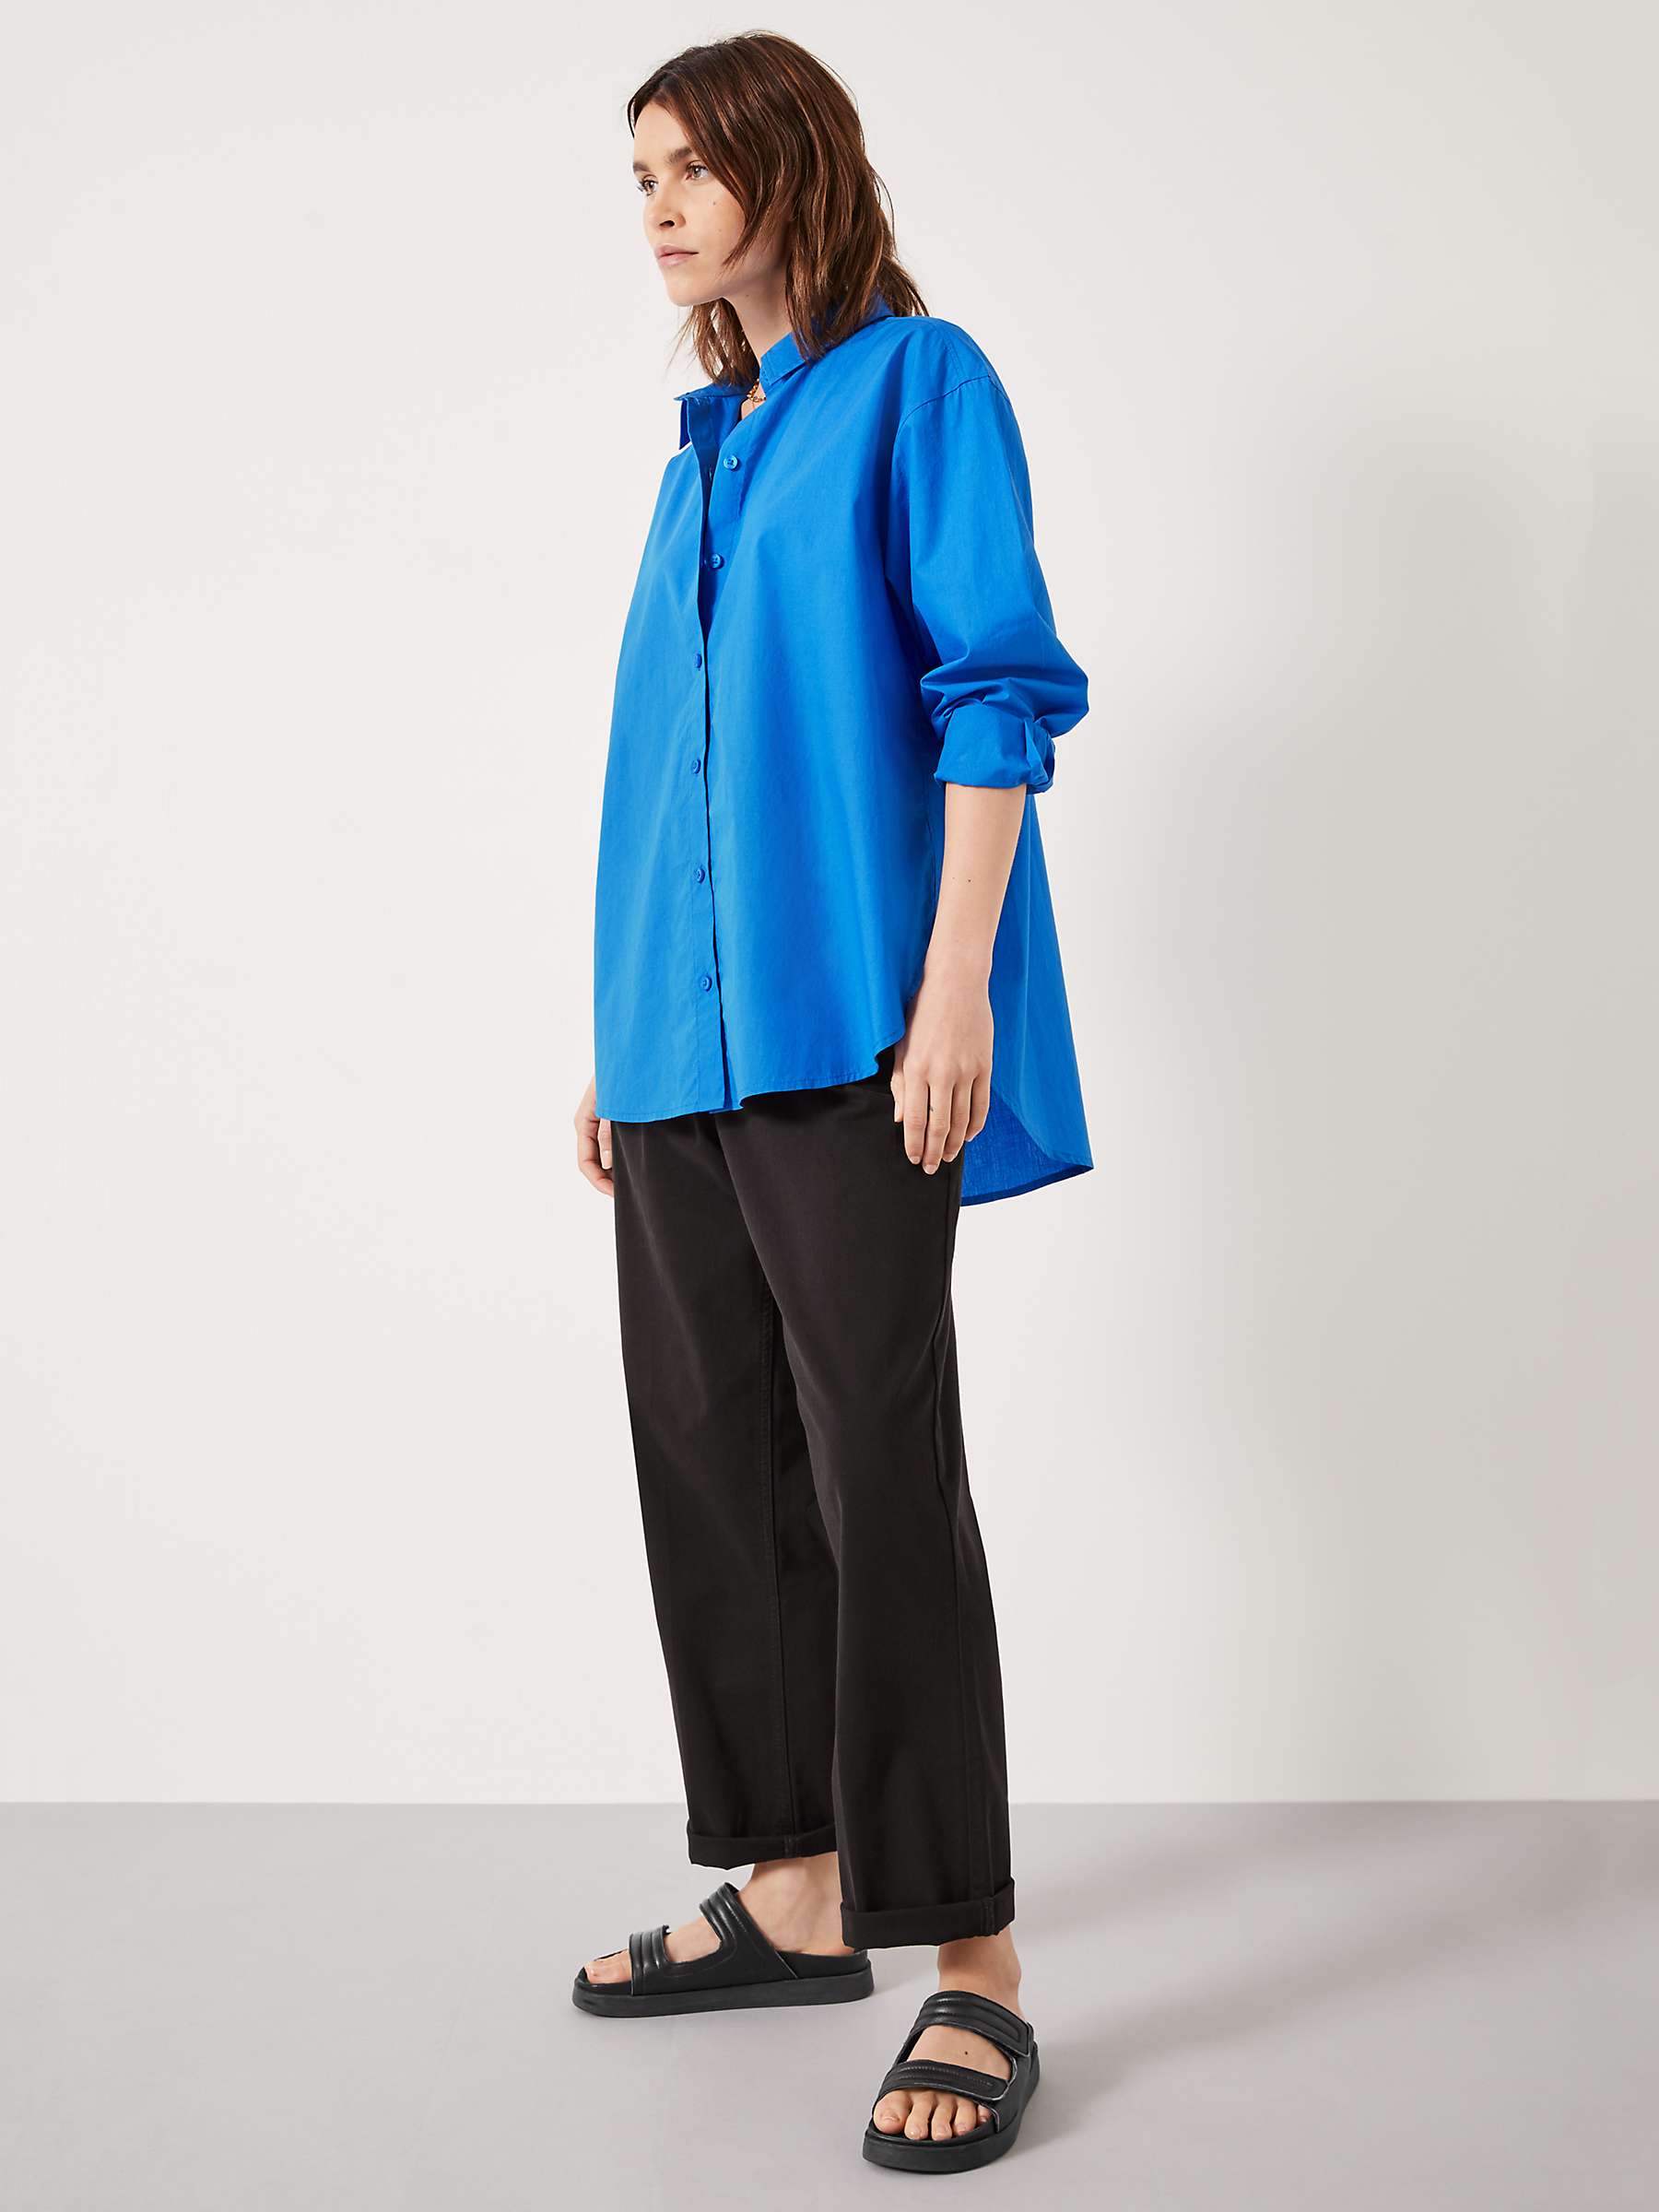 HUSH Pia Oversize Cotton Shirt, Vivid Blue at John Lewis & Partners